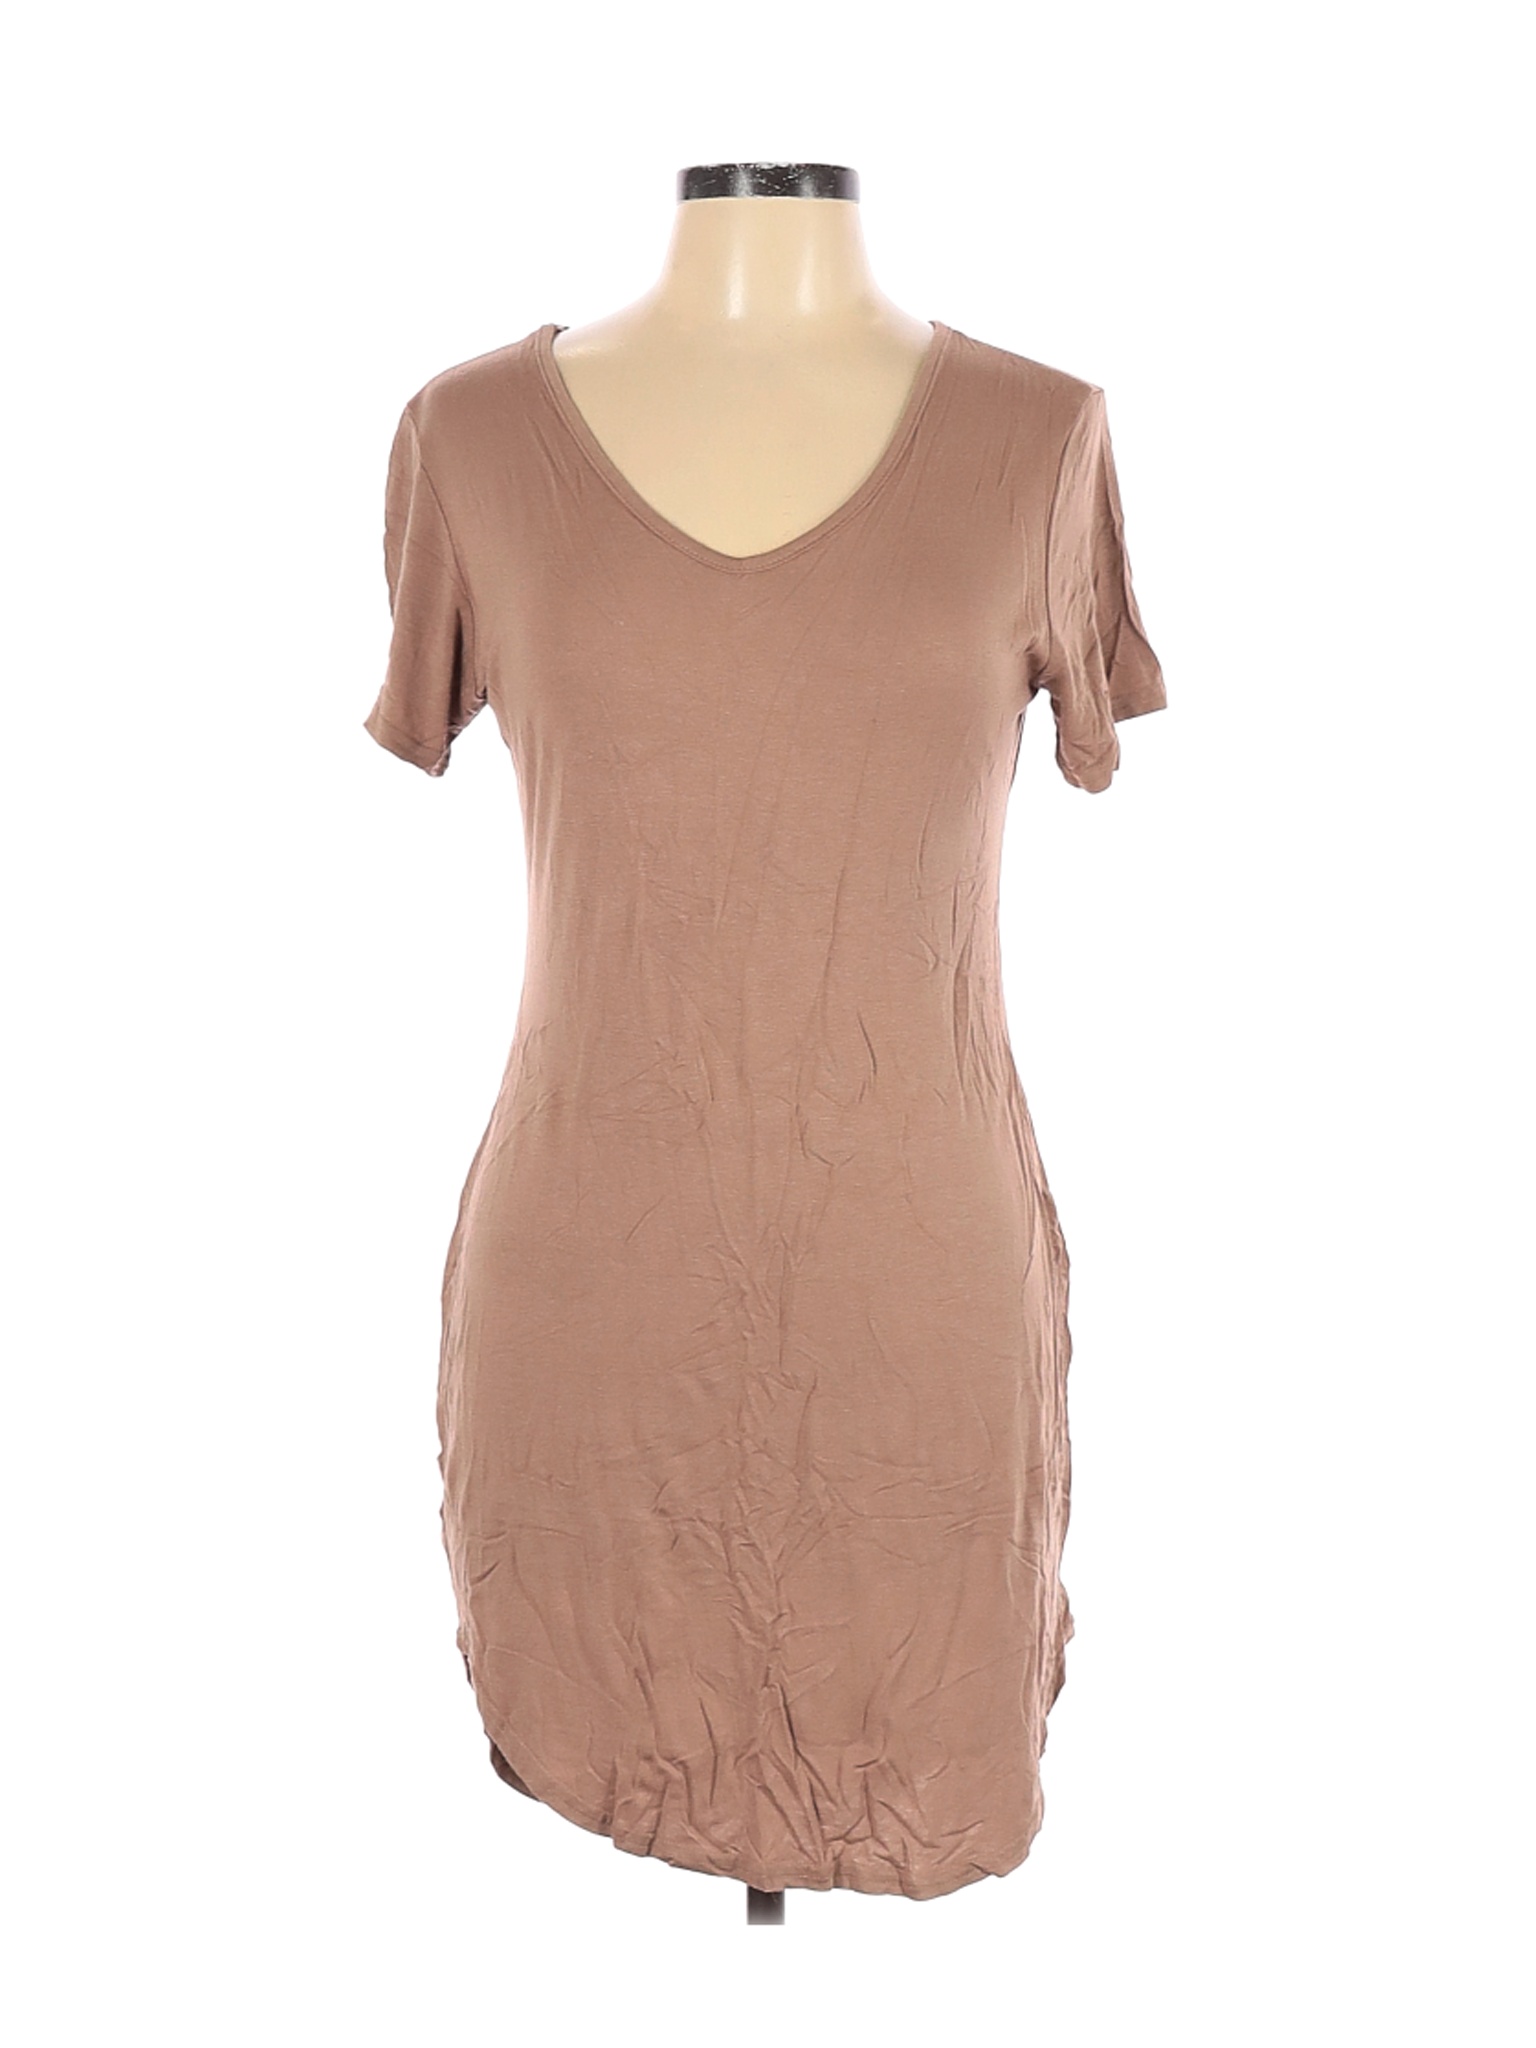 Unbranded Women Brown Casual Dress L | eBay